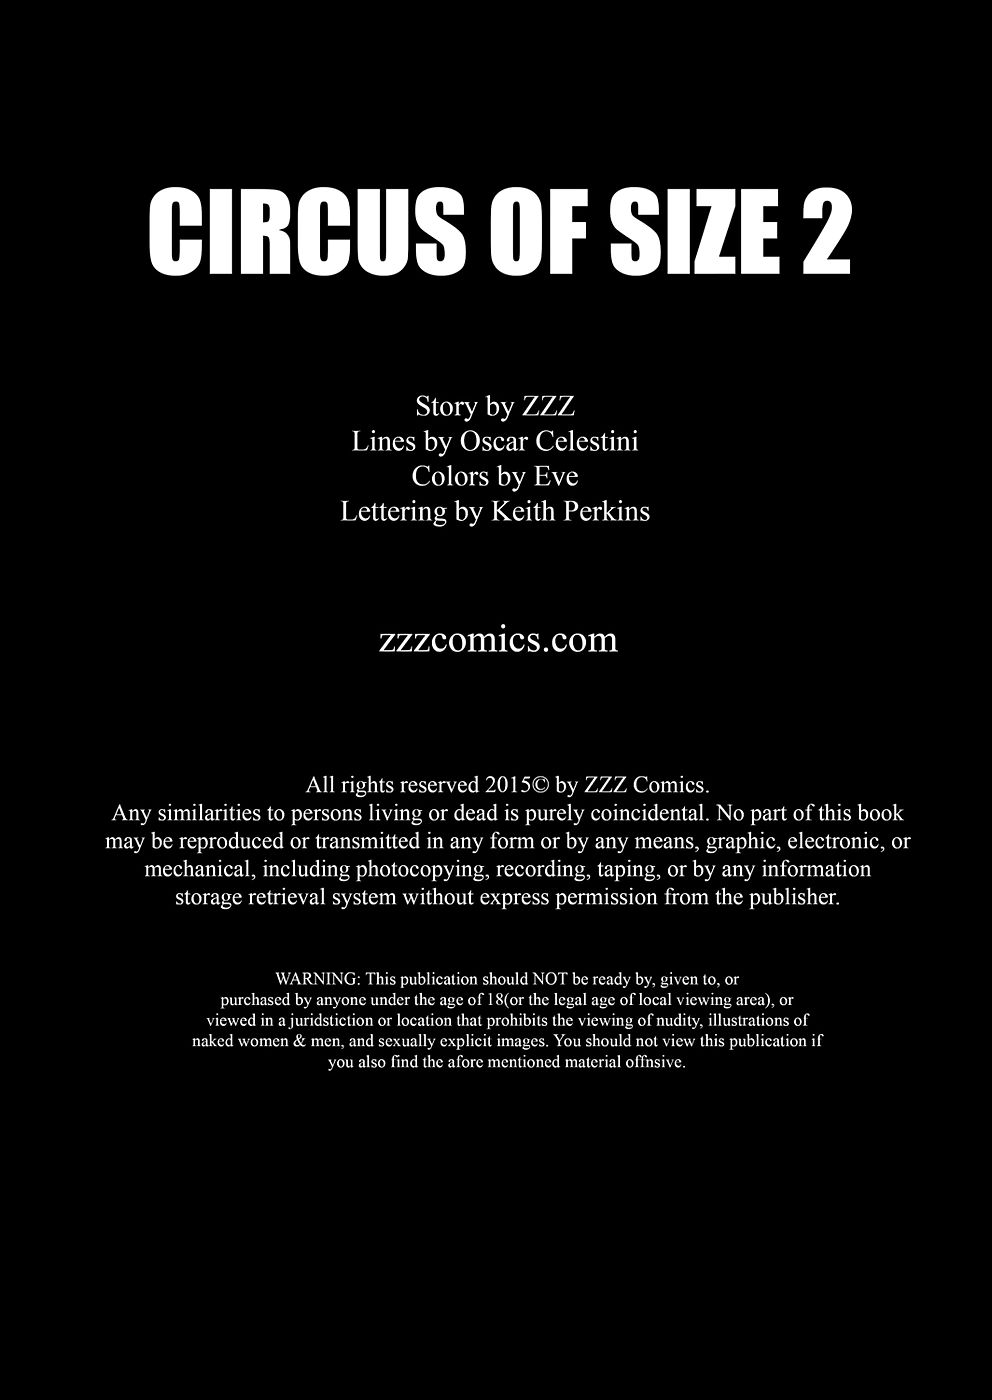 zzz circo de Tamanho 2 page 1